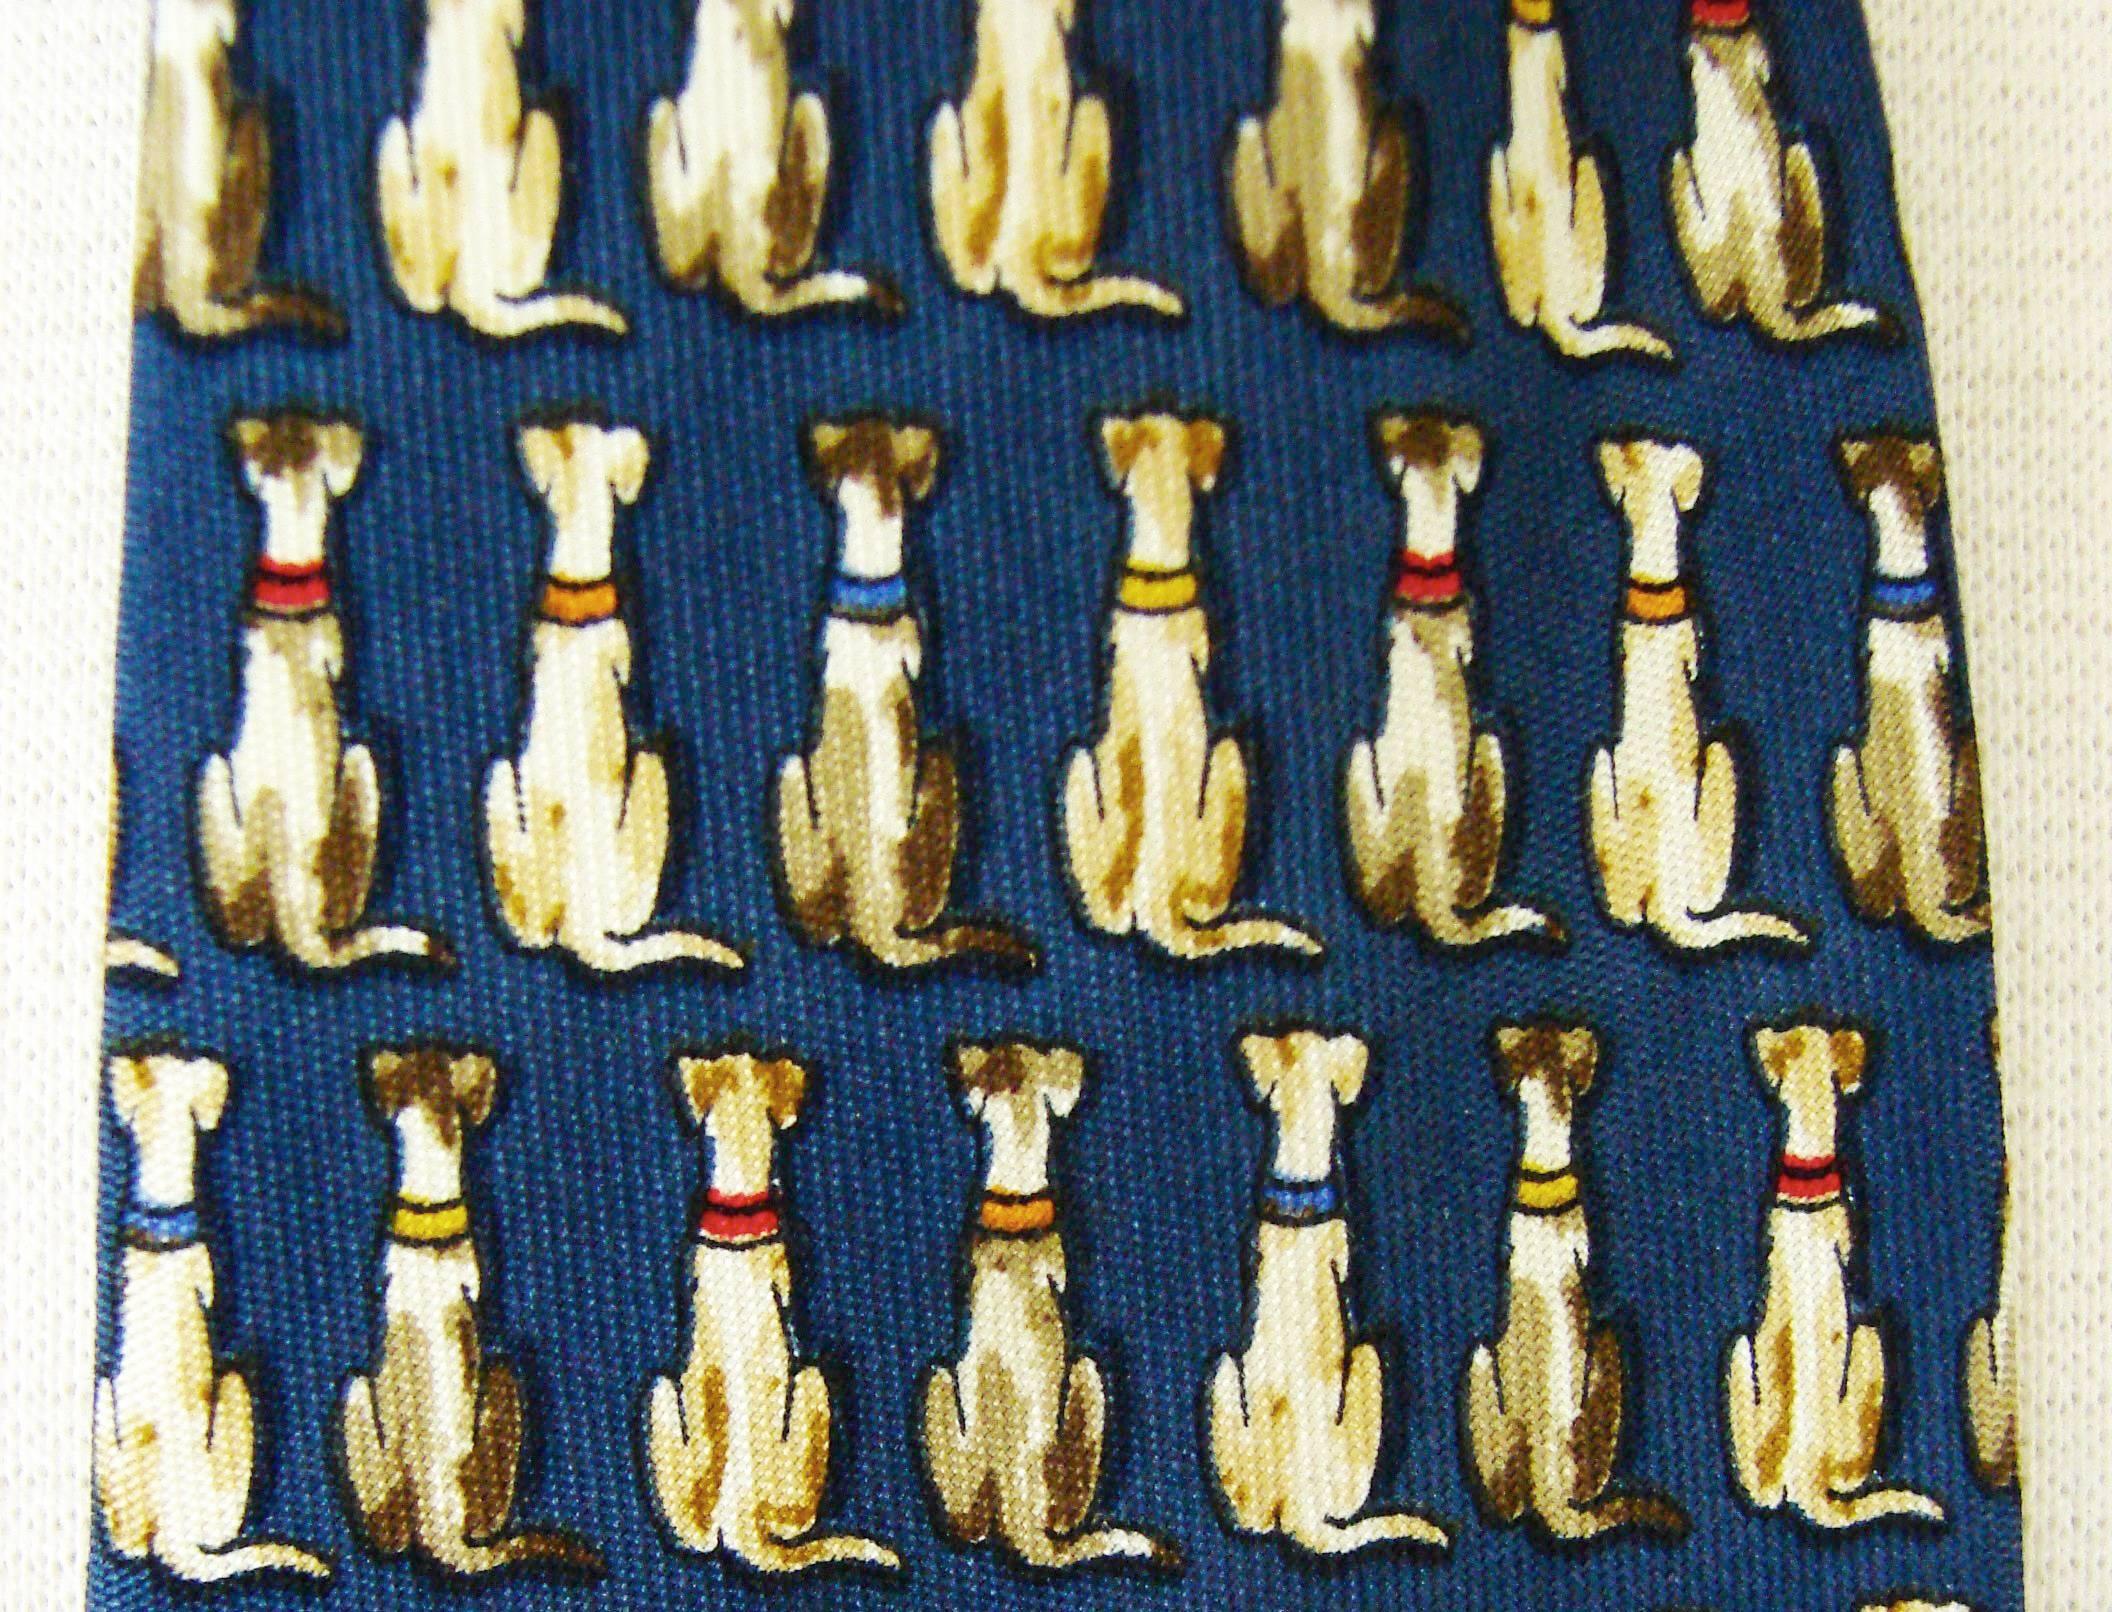 Men's Salvatore Ferragamo Whimsical Silk Neck Tie with Sitting Dogs 1990s